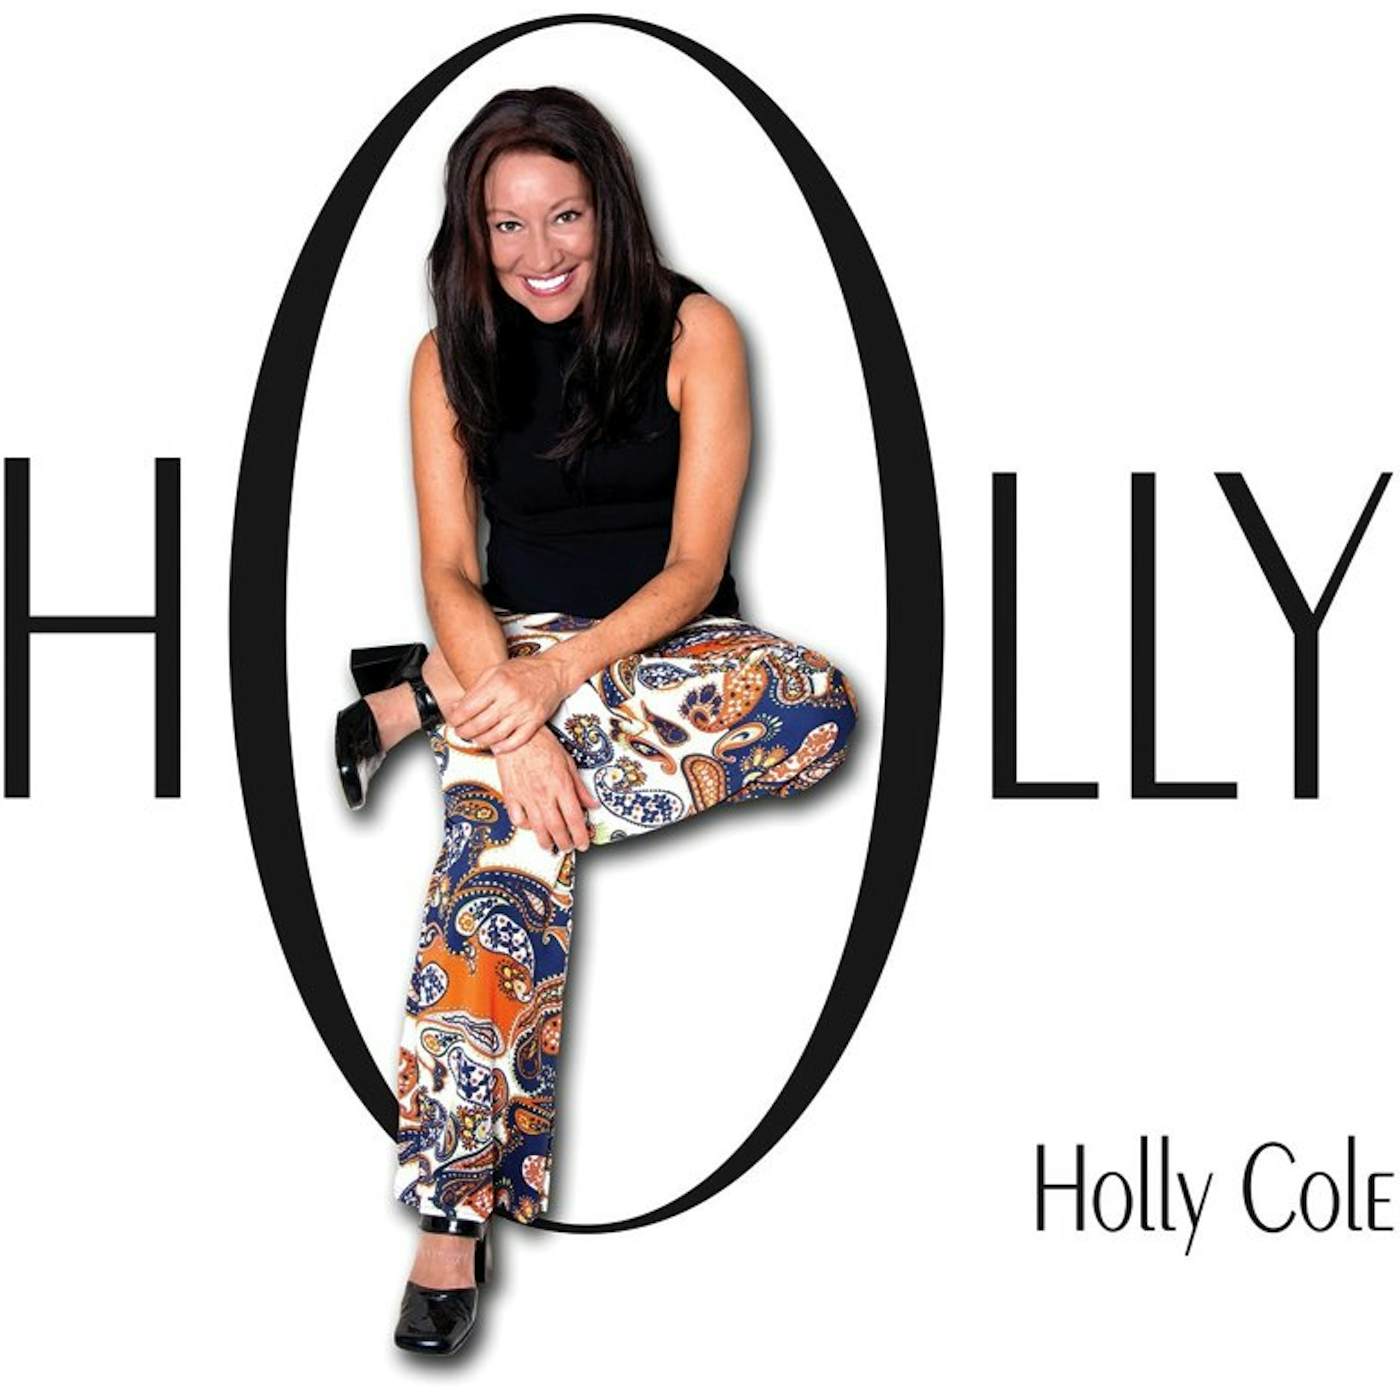 Holly Cole Holly CD